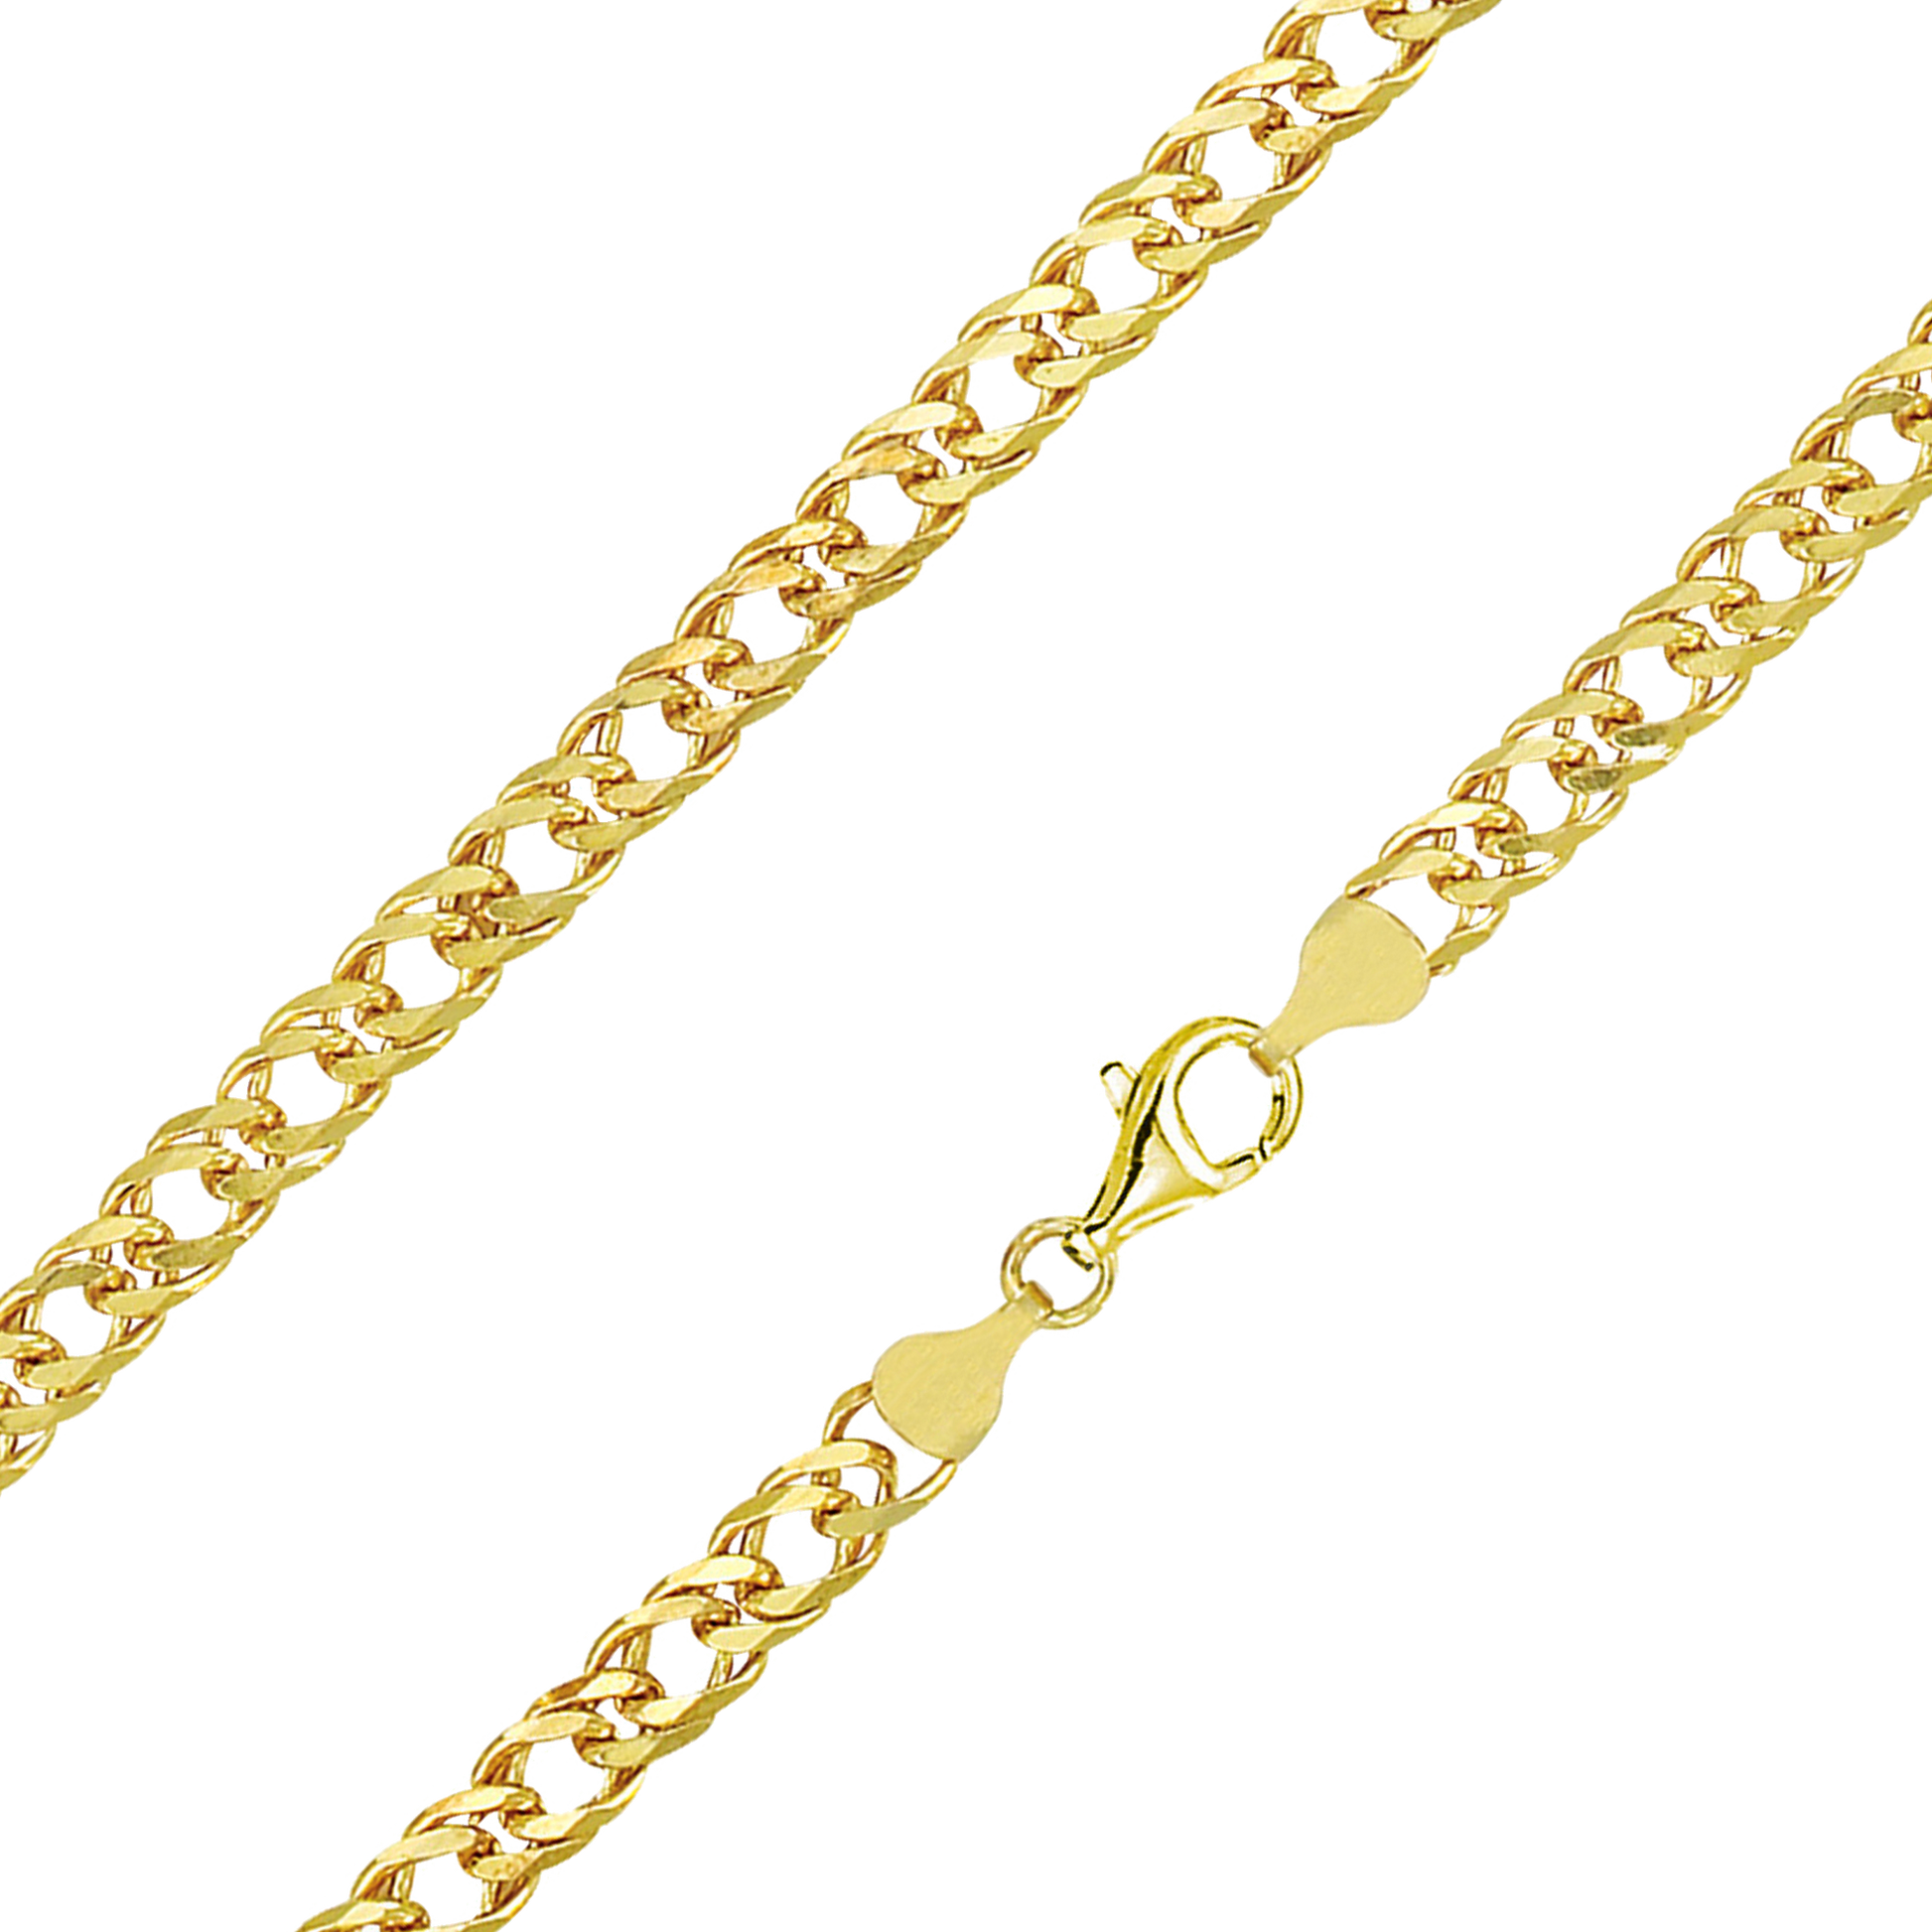 Franco Stellari Italian Sterling Silver Yellow Gold 7mm Double Link Chain